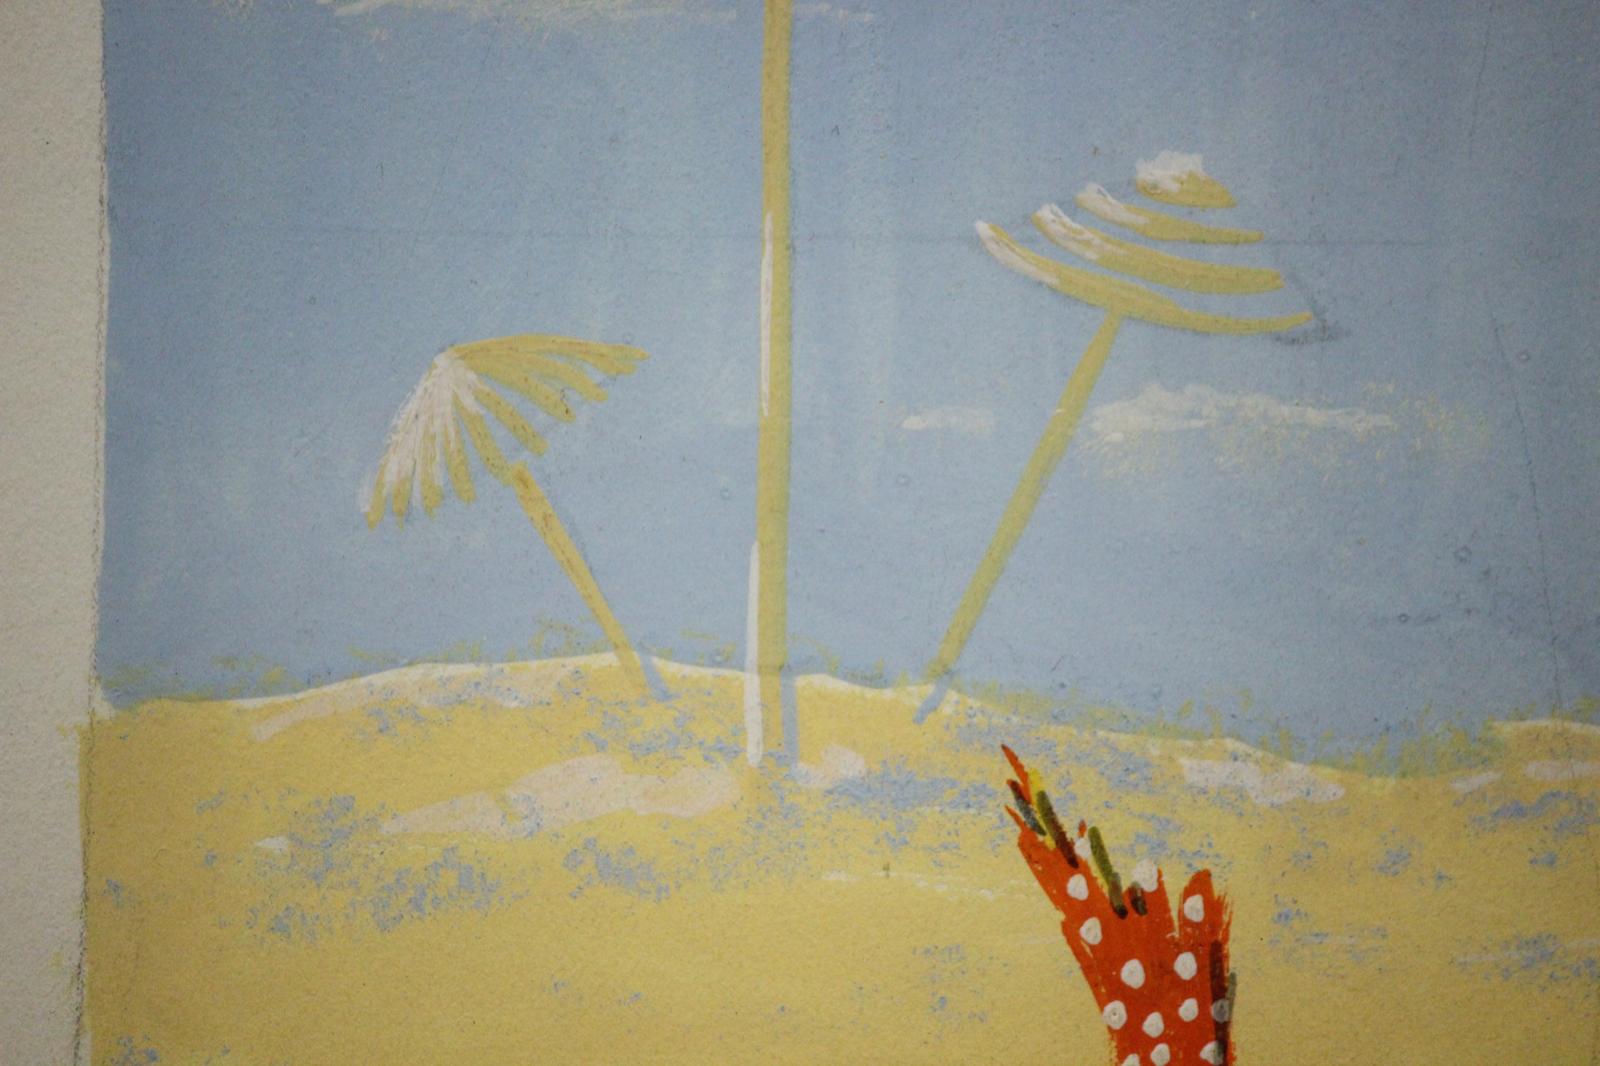 Original advert illustration c1950s Fun 'n Sun artwork for Lanvin of Paris Place Vendome to promote their suntan lotion by Alexander Warren Montel (1921-2002) featuring a bikini-clad girl squeezing the tube

Art Sz: 11 1/2